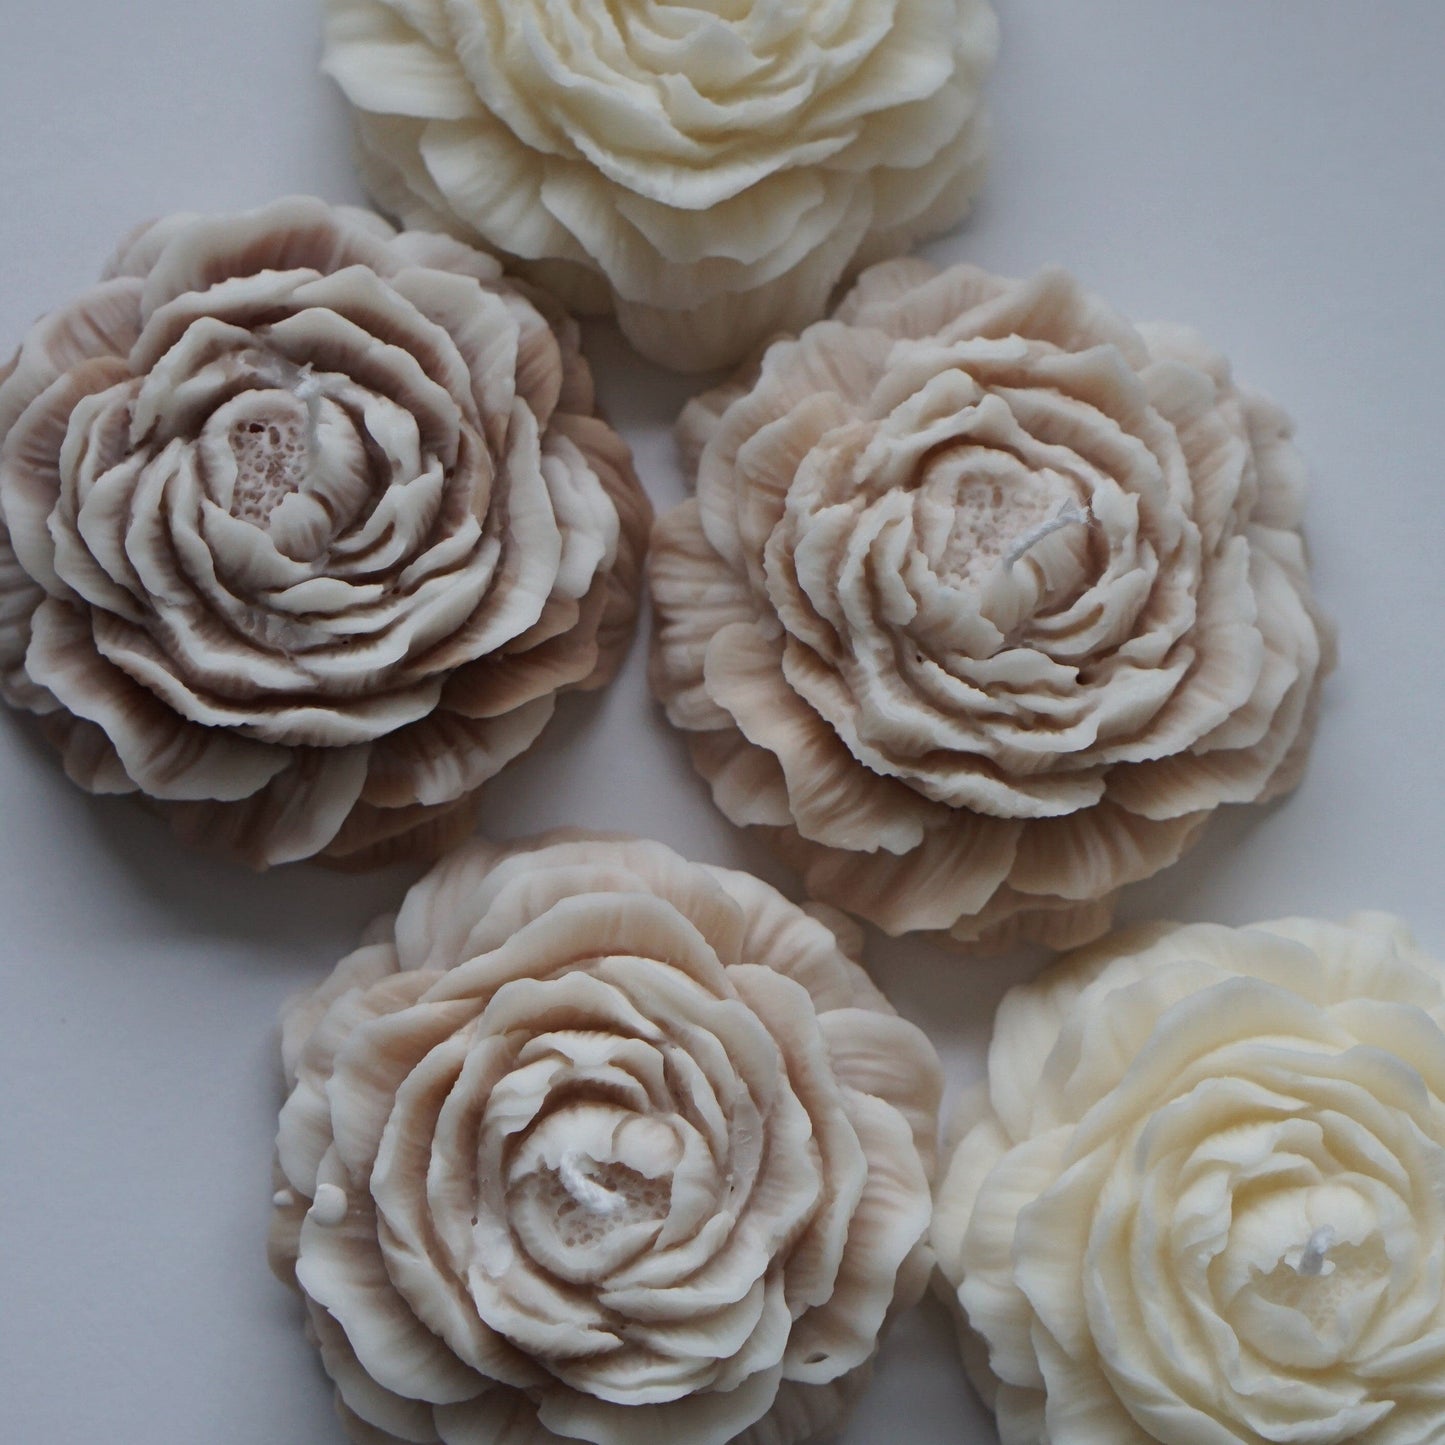 Handmade designer candle roses